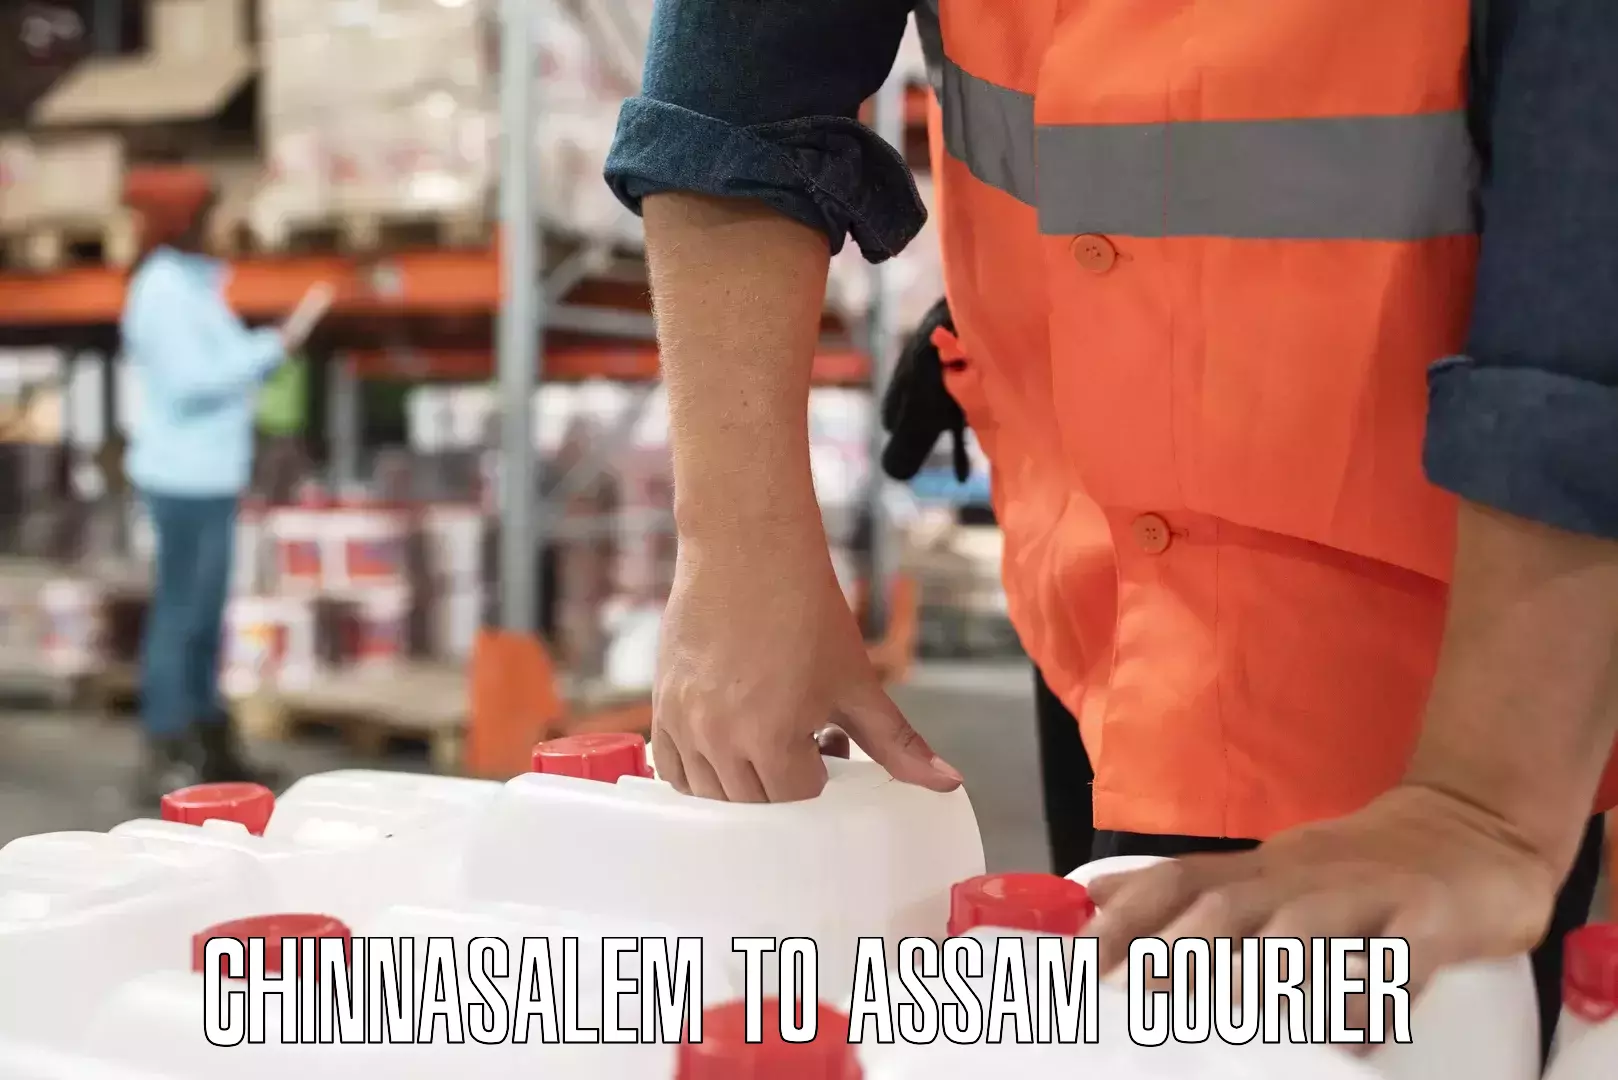 Supply chain efficiency Chinnasalem to Assam